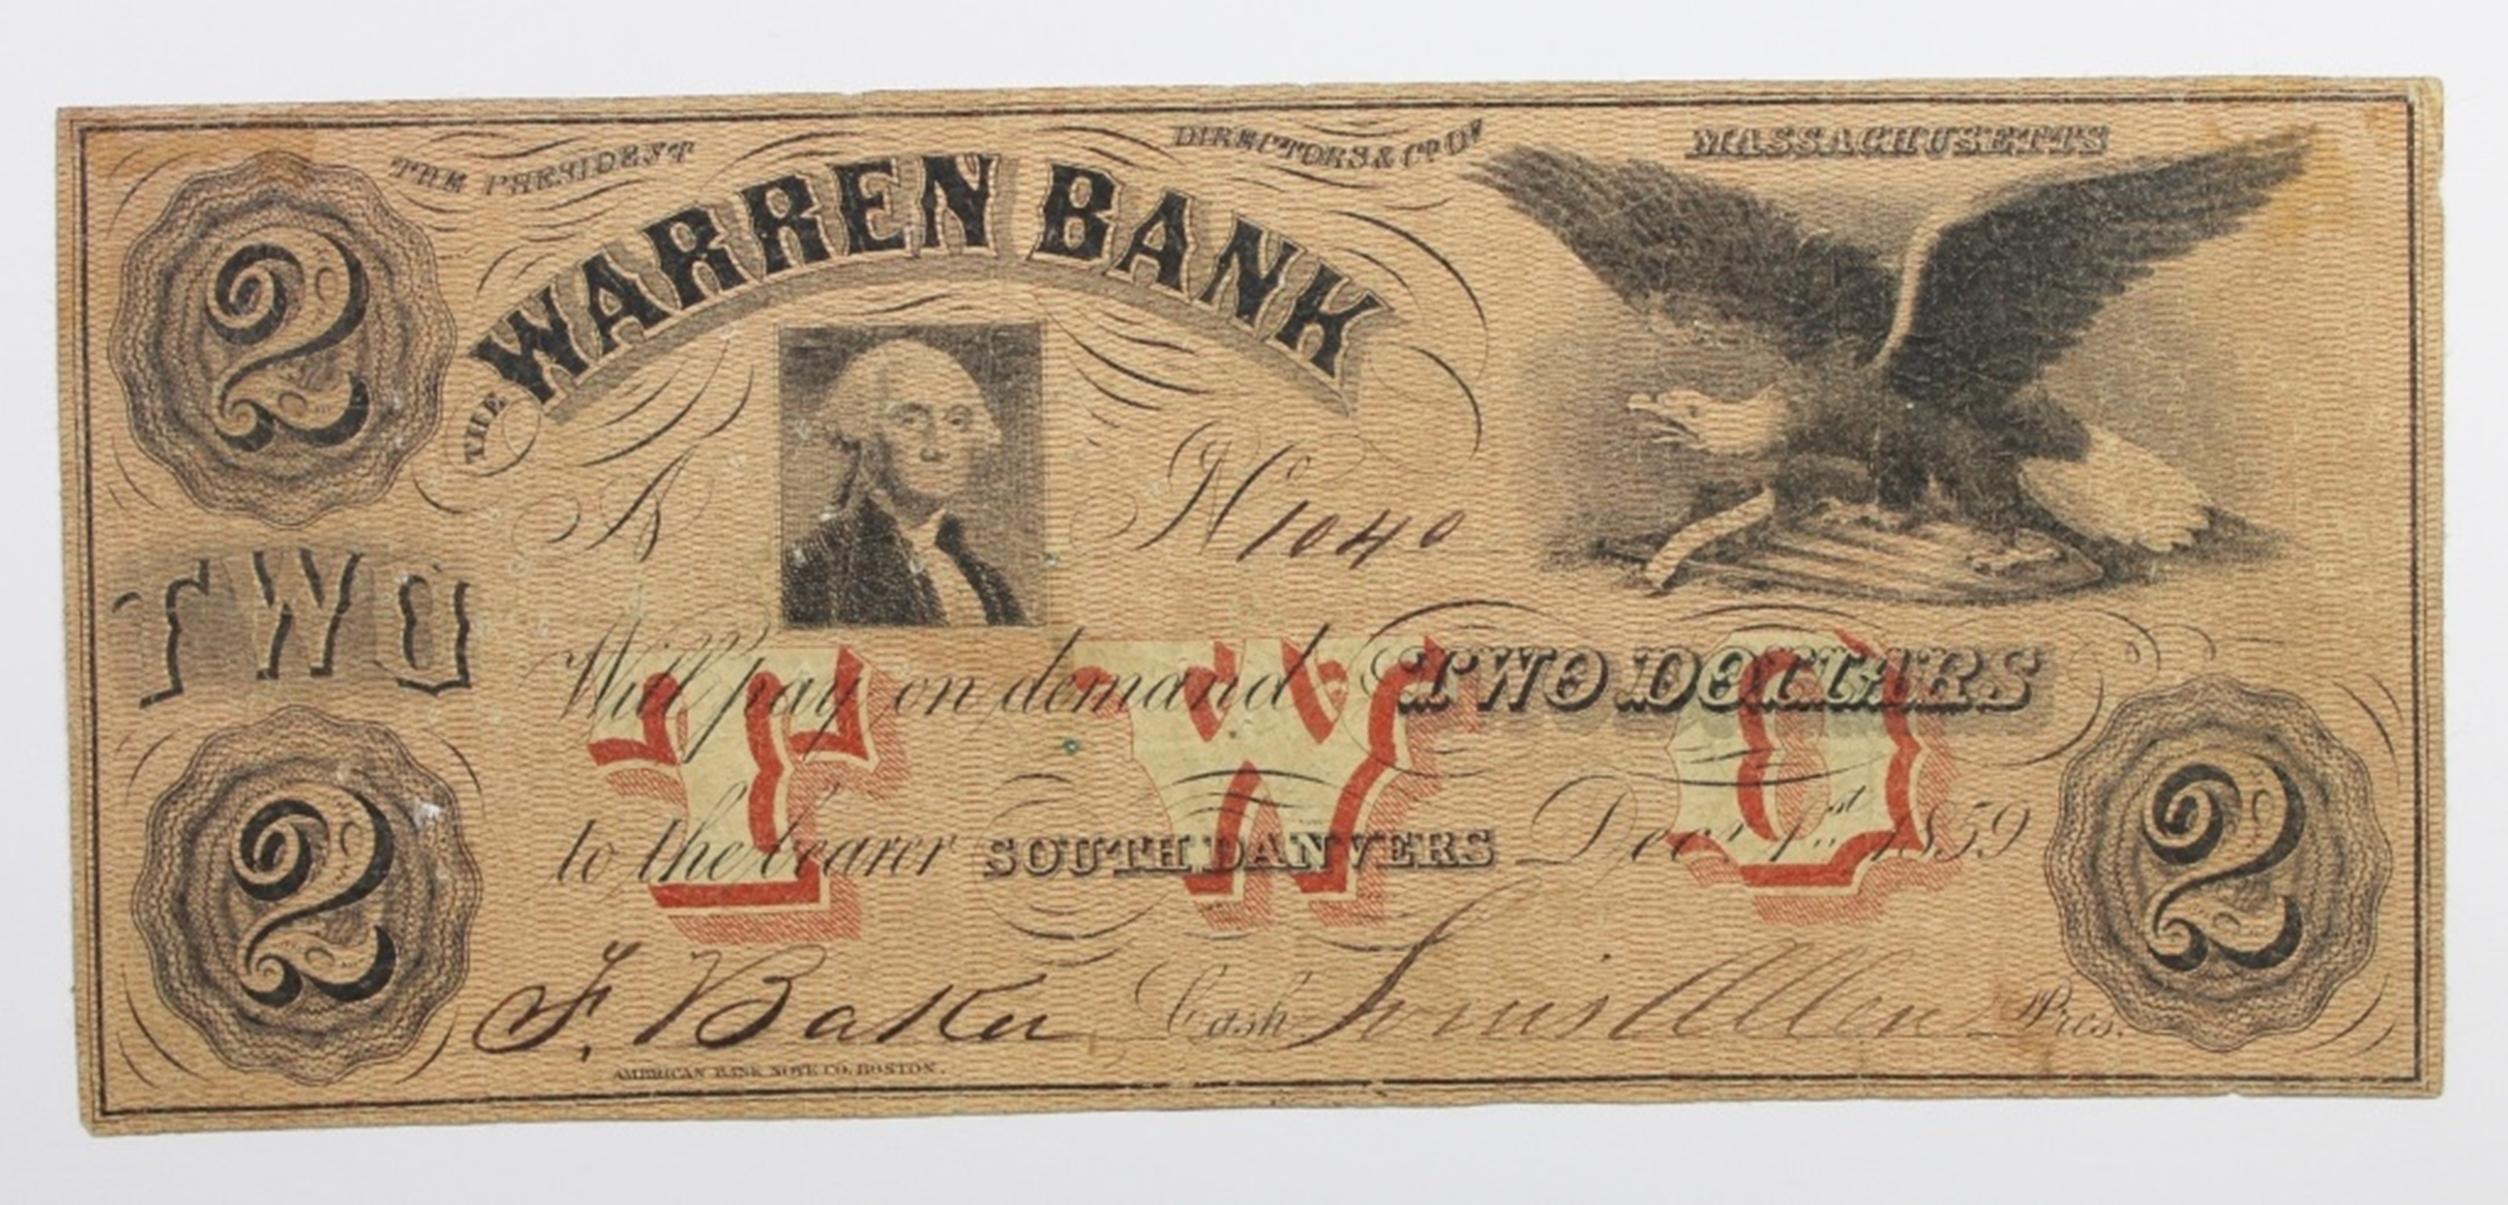 1859 $2 WARREN BANK